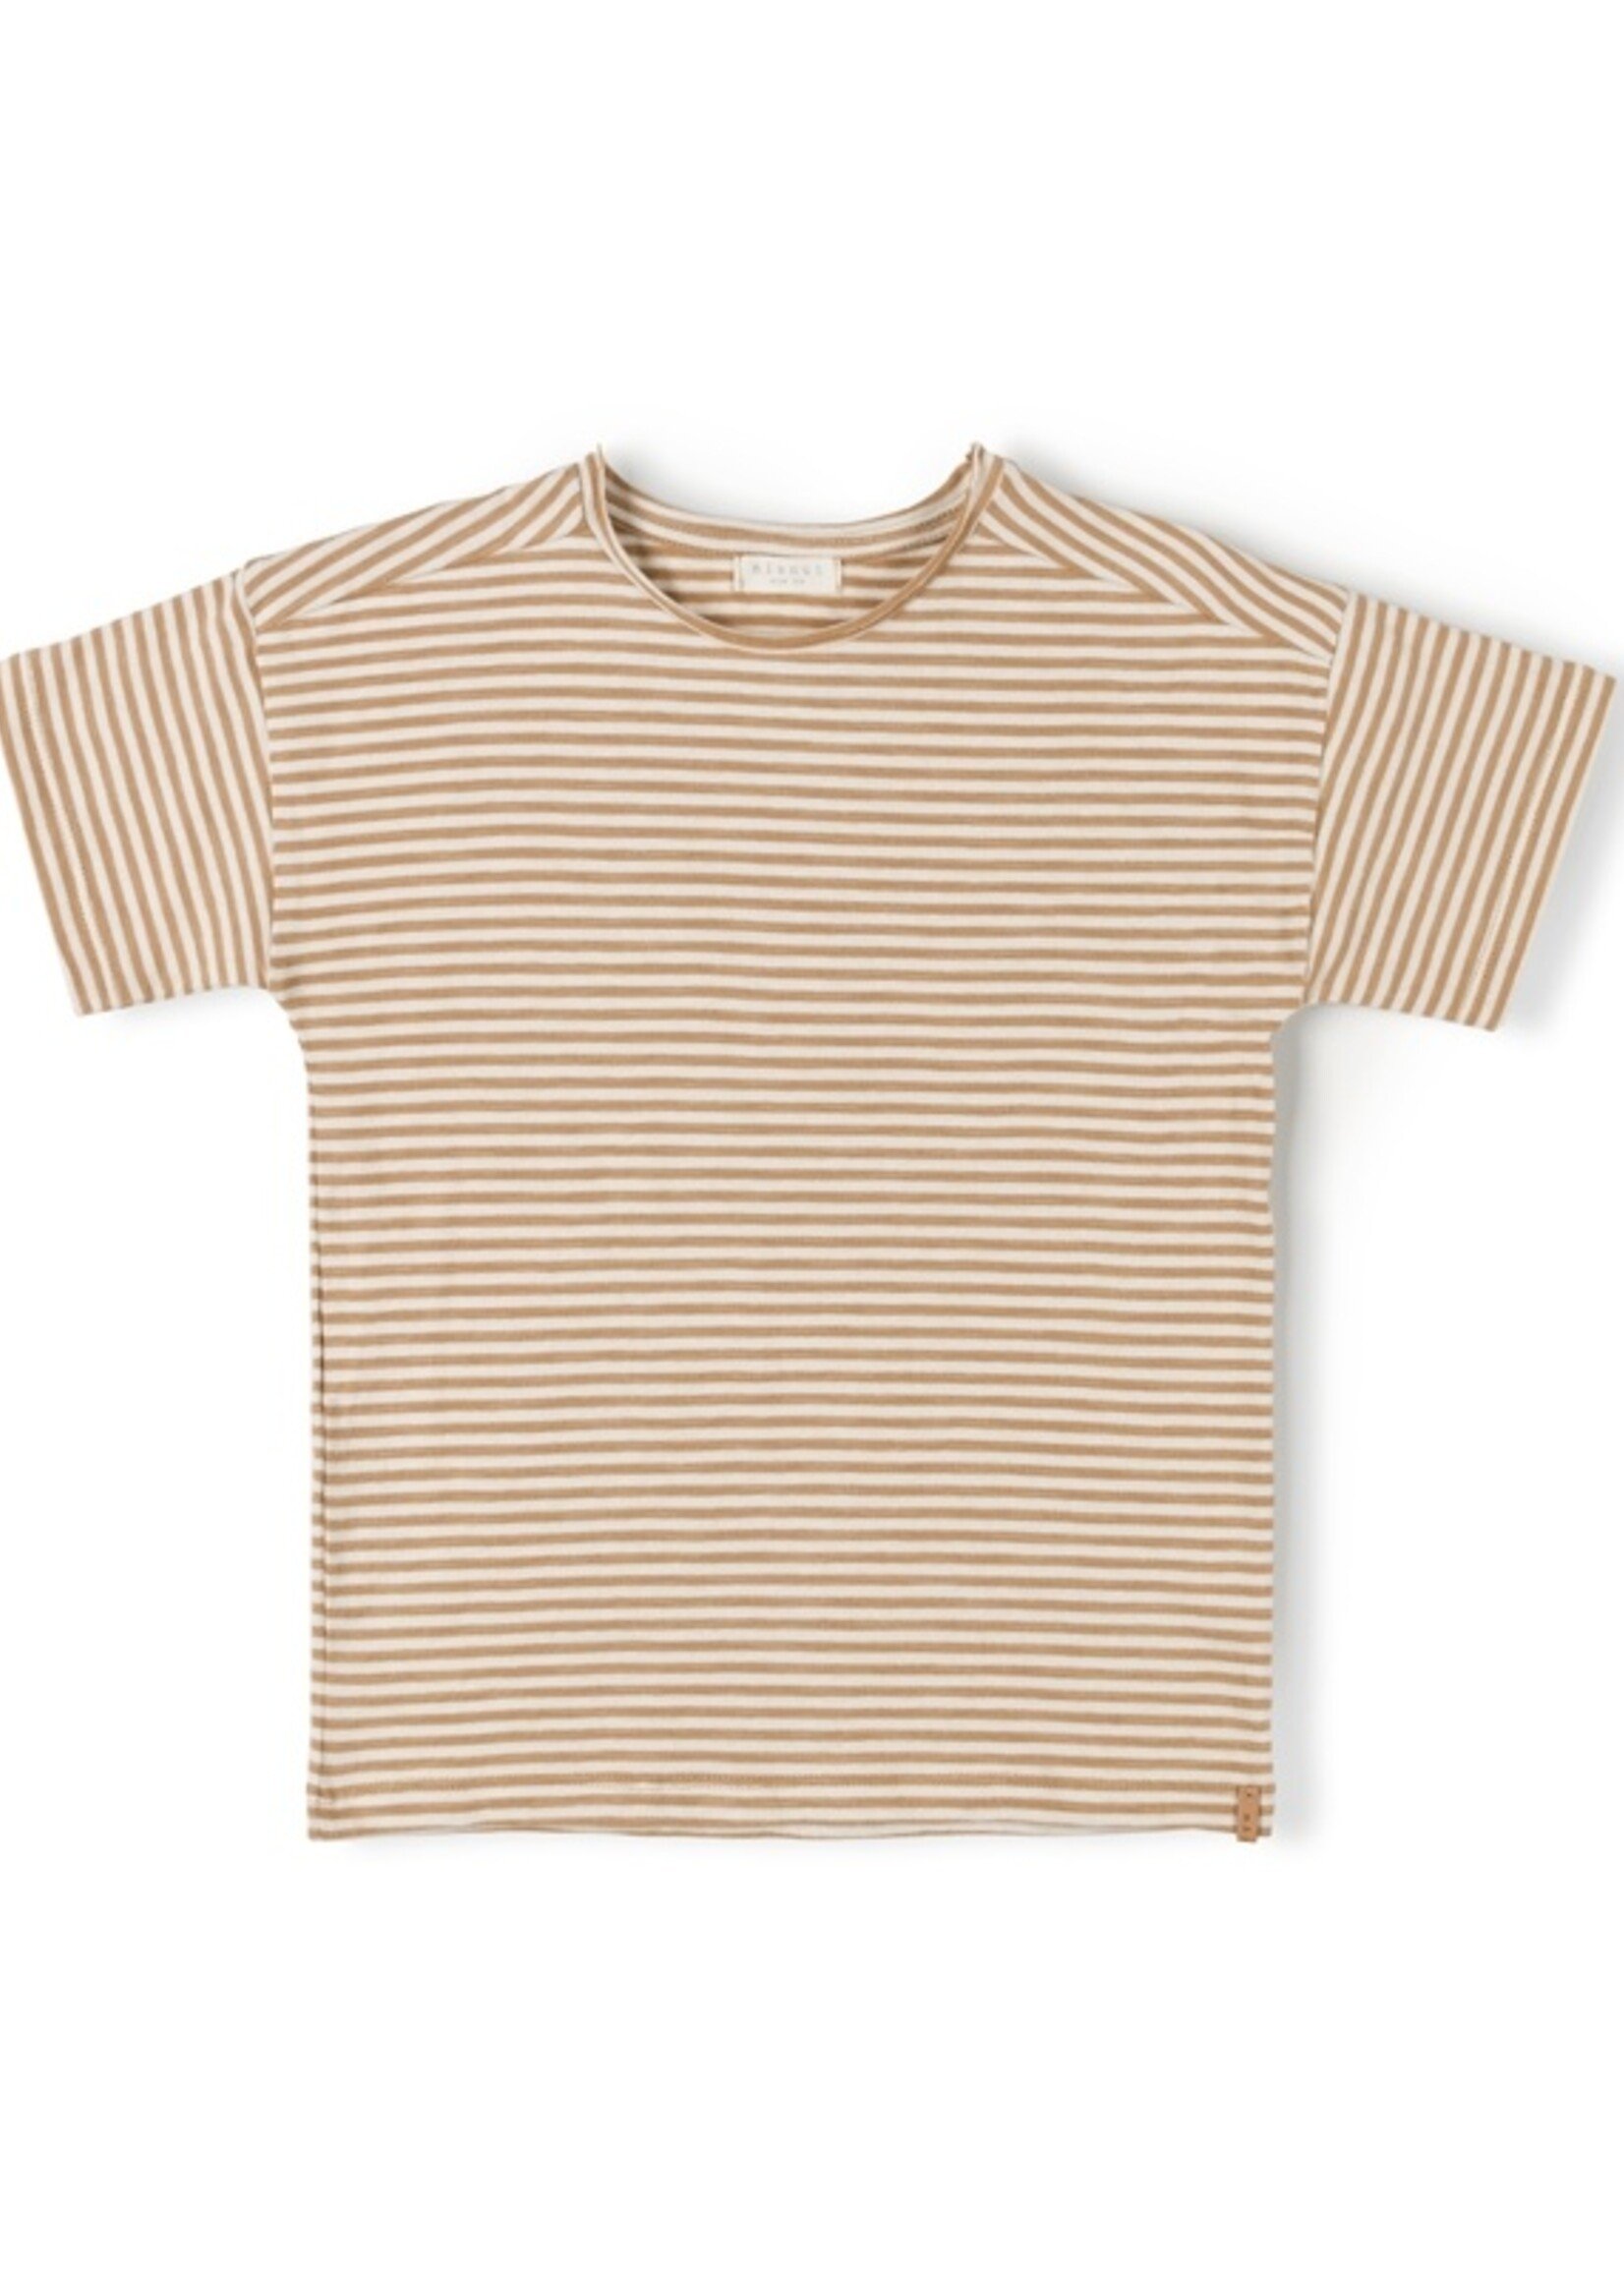 Nixnut Nixnut | Com Tshirt - Caramel Stripe